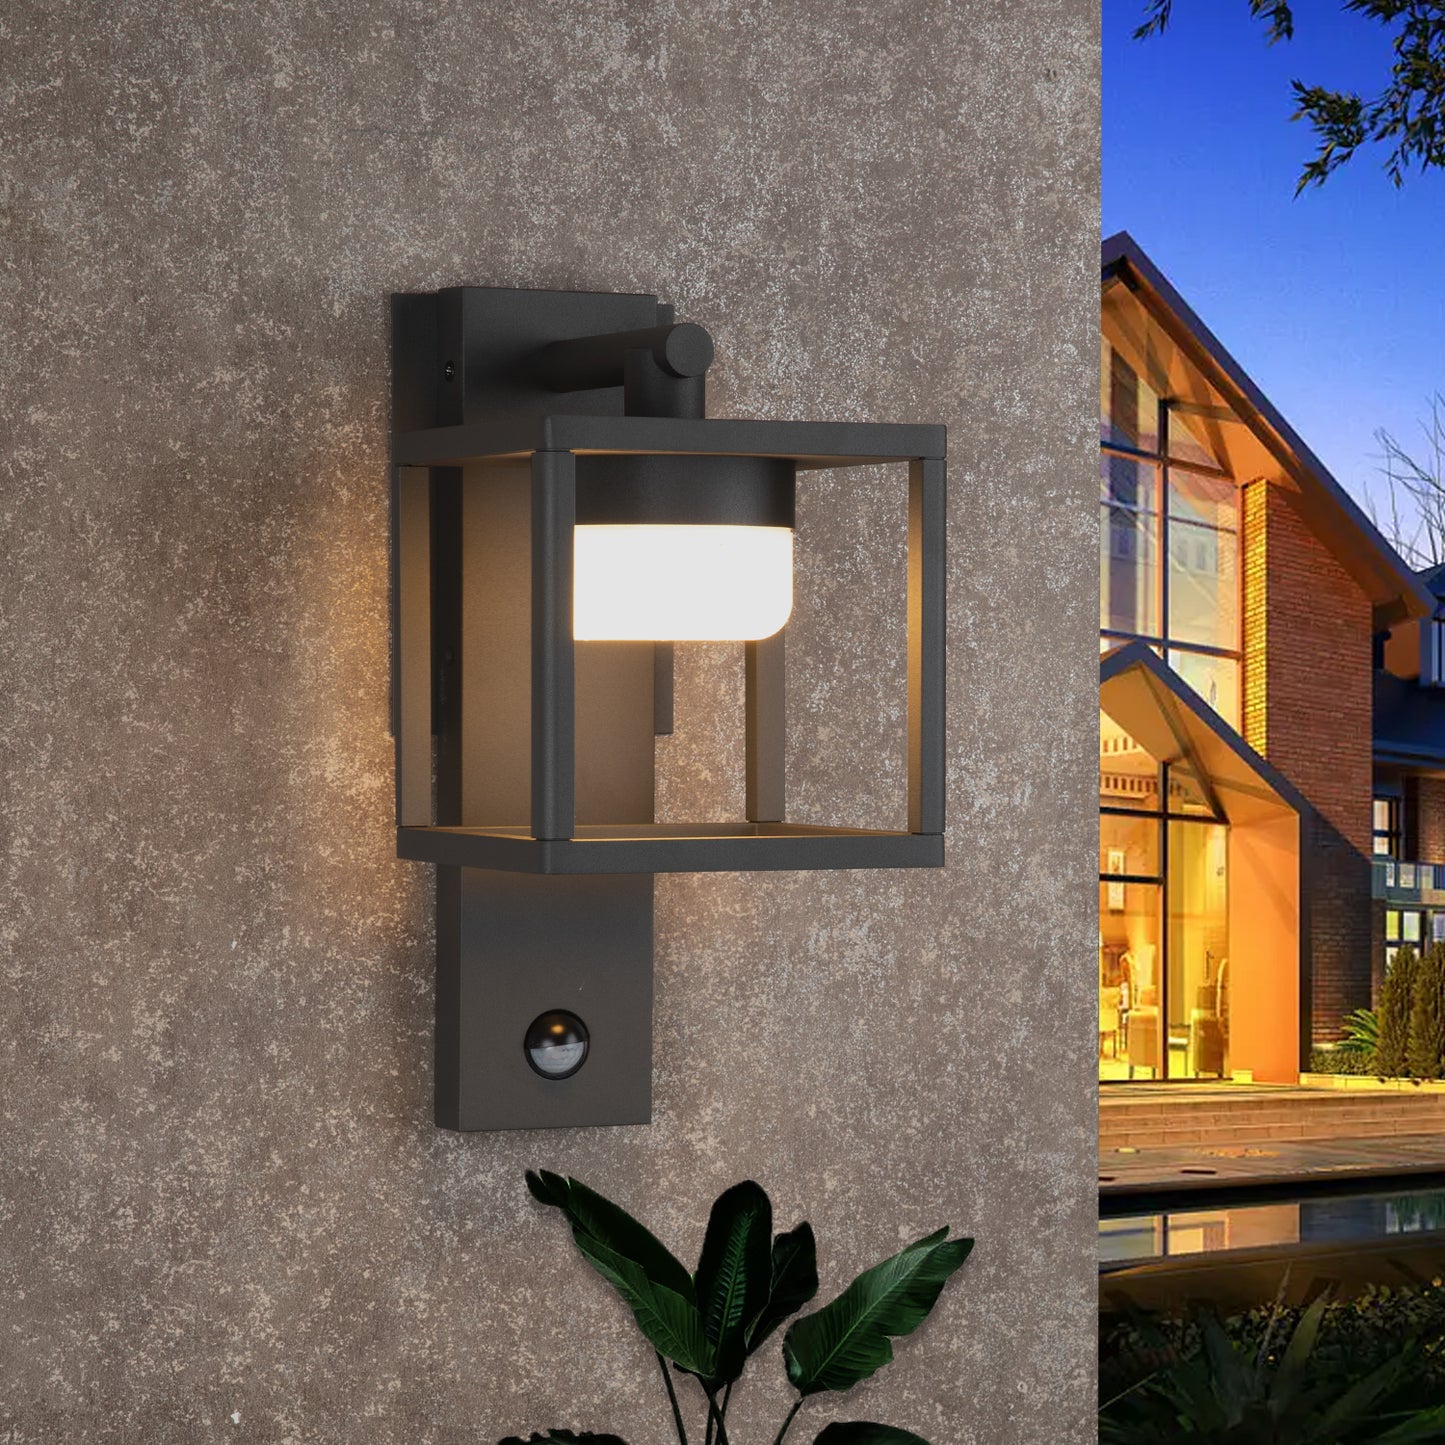 Outdoor Wall Light/ Path Light Aluminum LED Wall Light